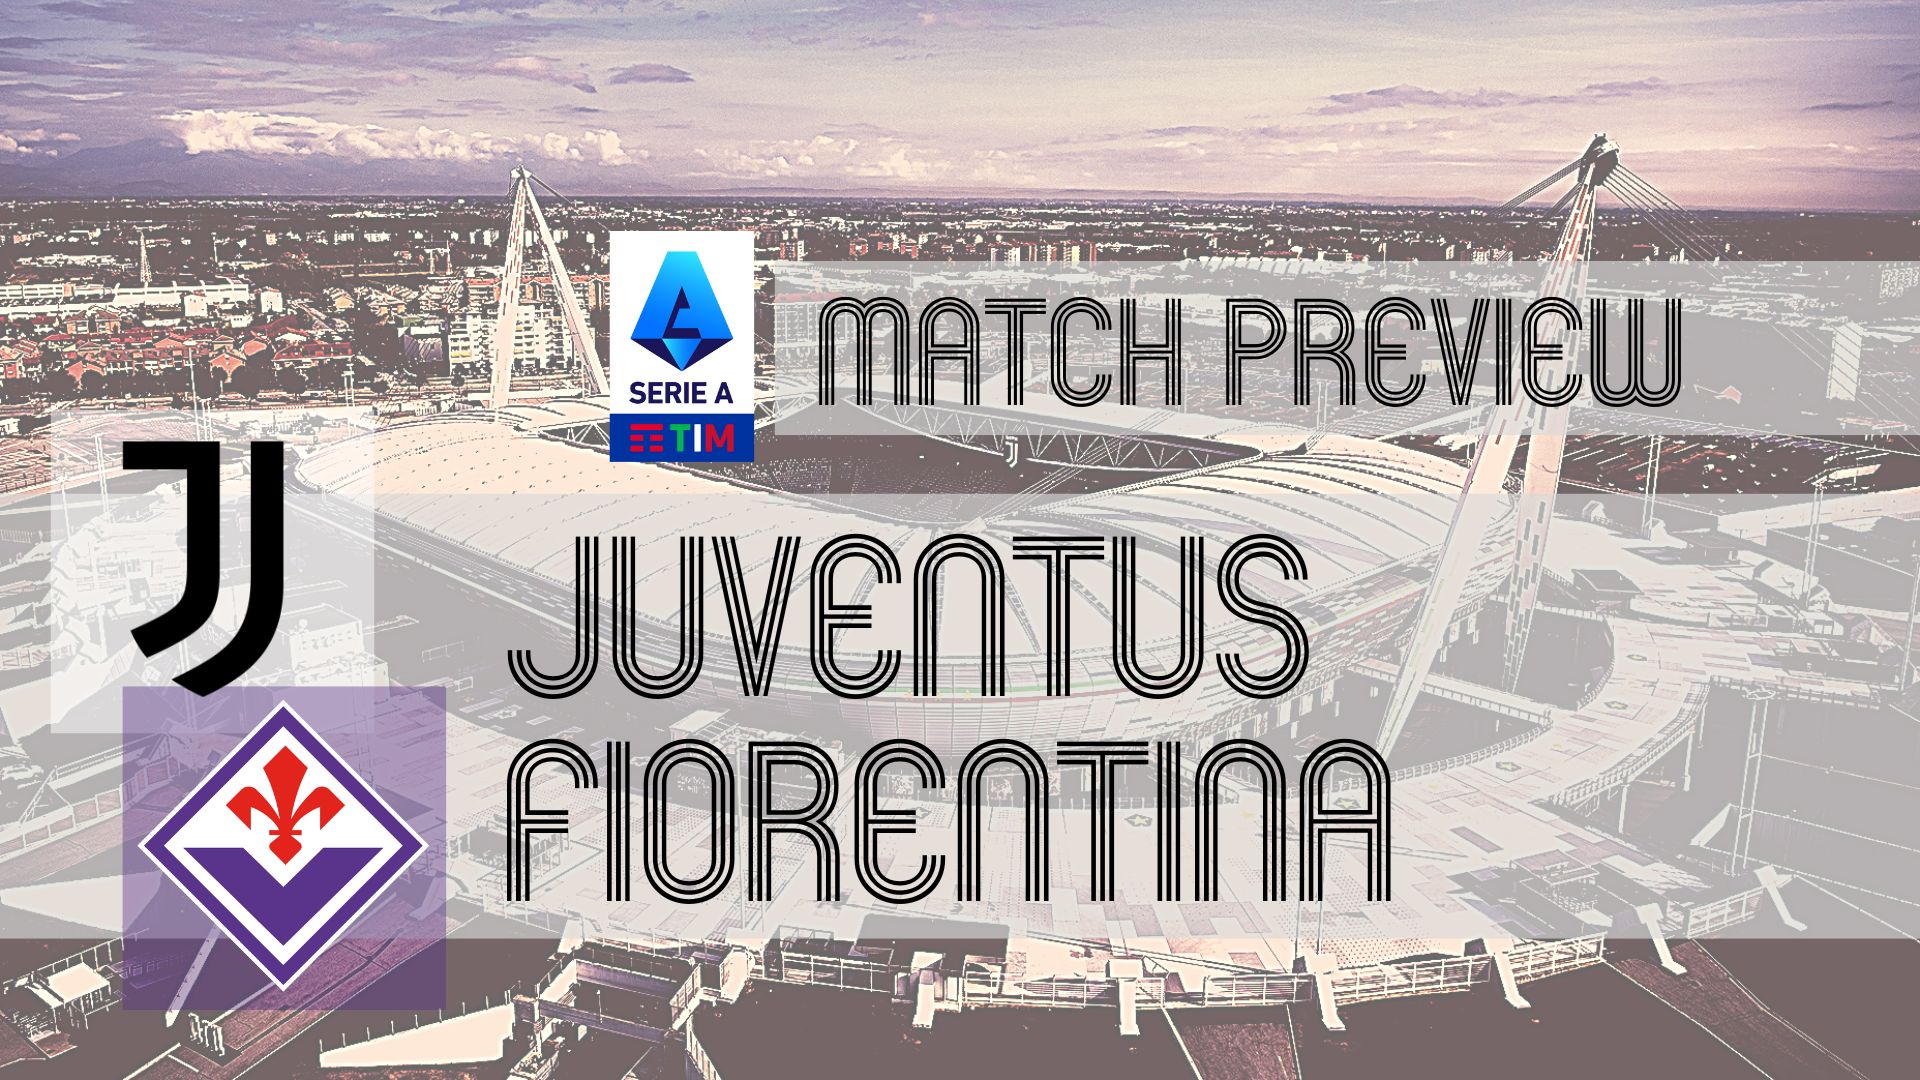 Juventus - Fiorentina  Serie A 2022-2023 - Juventus Men's First Team